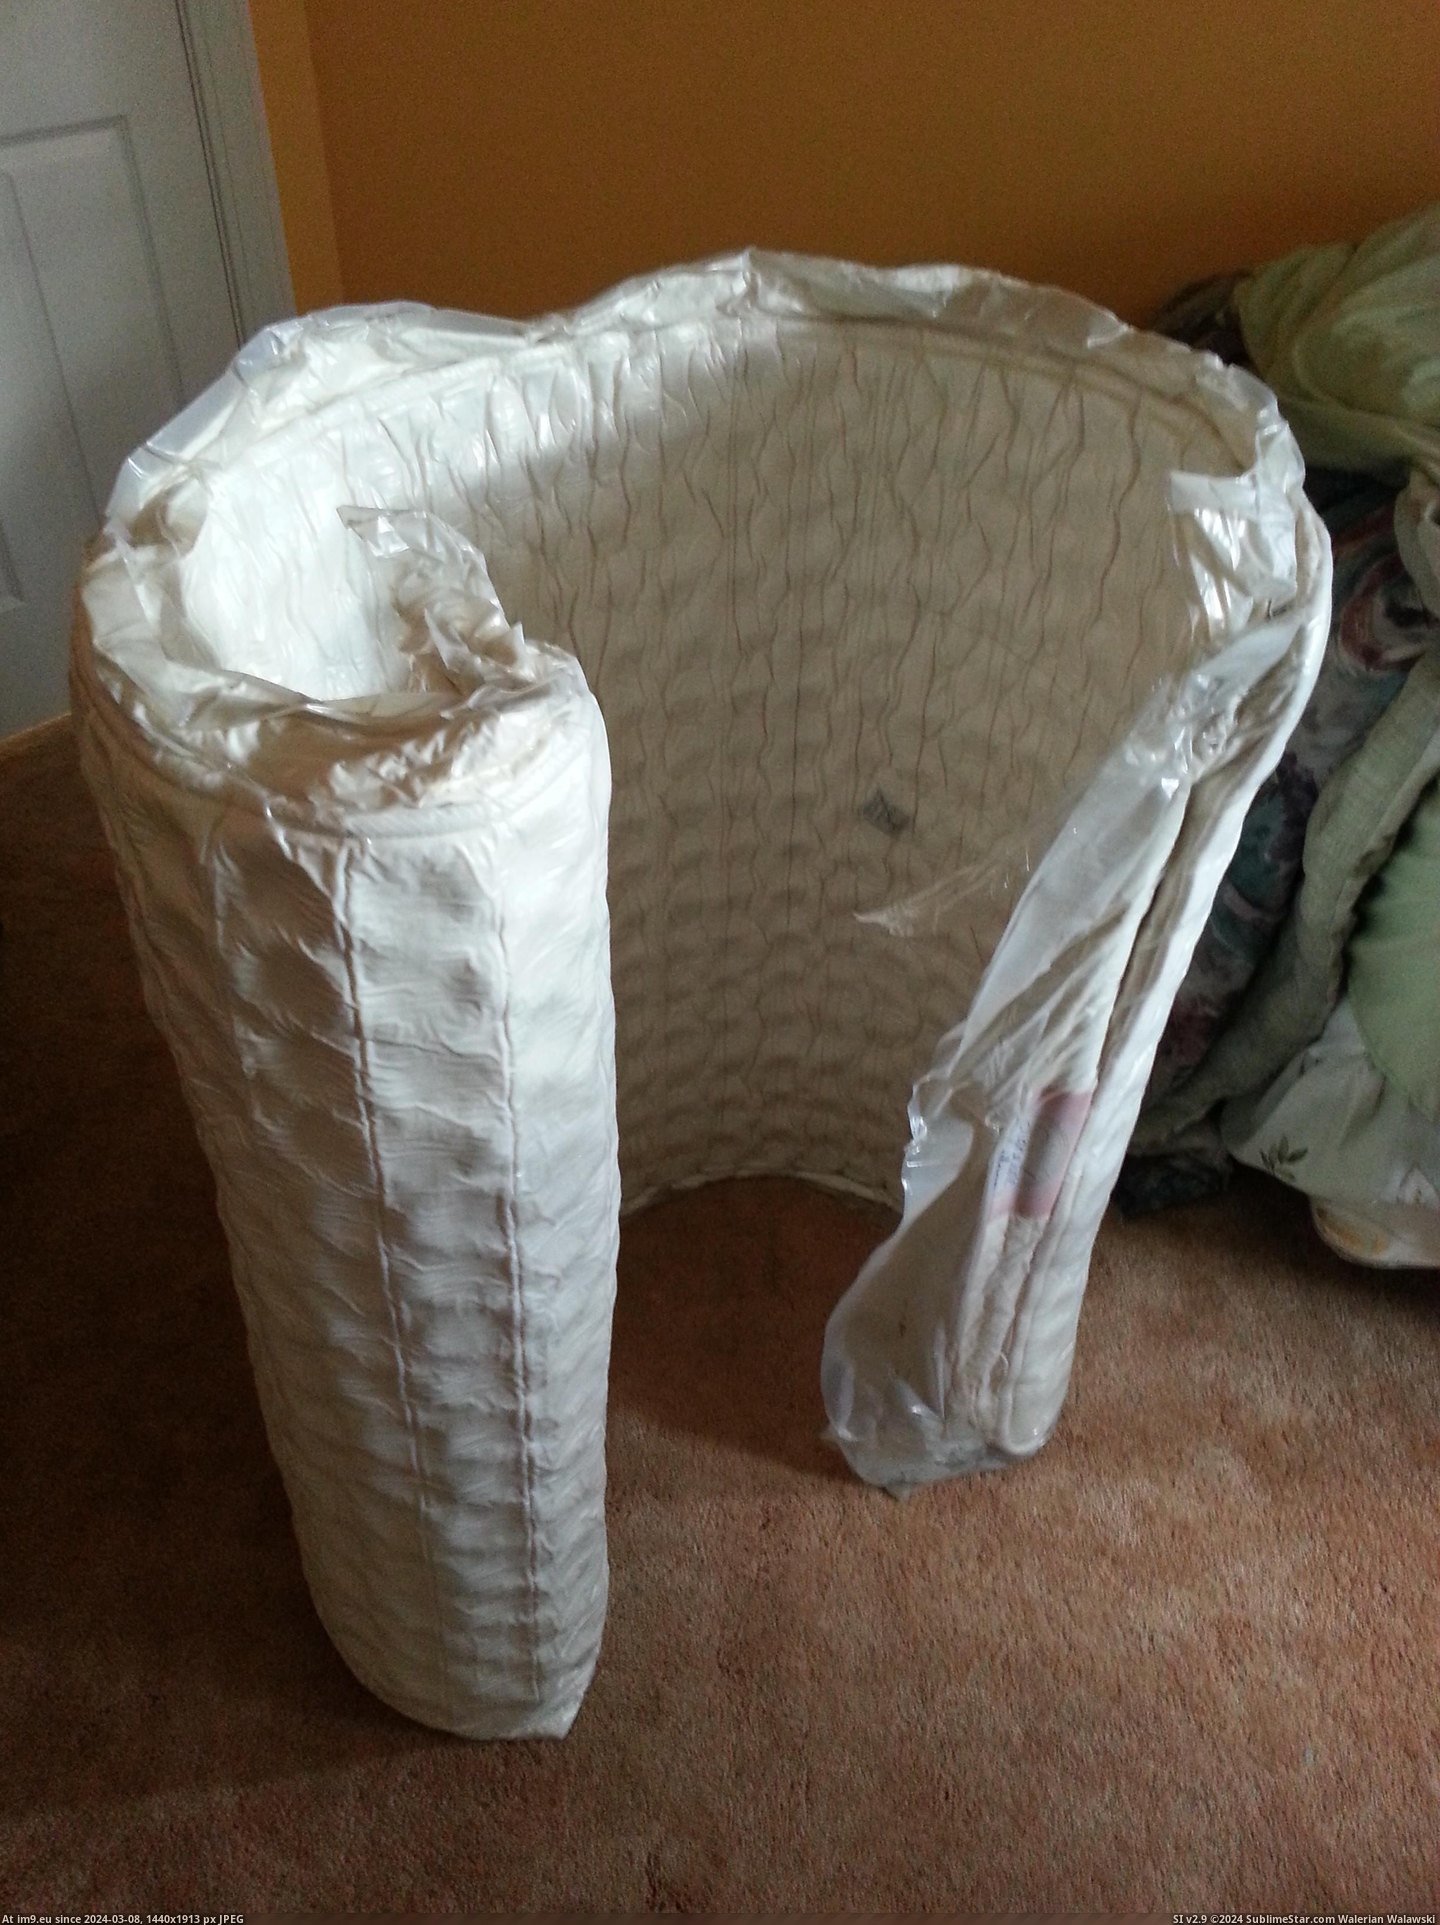 #Broke #Bag #Vacuum #Duffle #Unrolled #Seal #Mattress [Mildlyinteresting] Got a mattress in a duffle bag today, unrolled it and broke the vacuum seal 3 Pic. (Obraz z album My r/MILDLYINTERESTING favs))